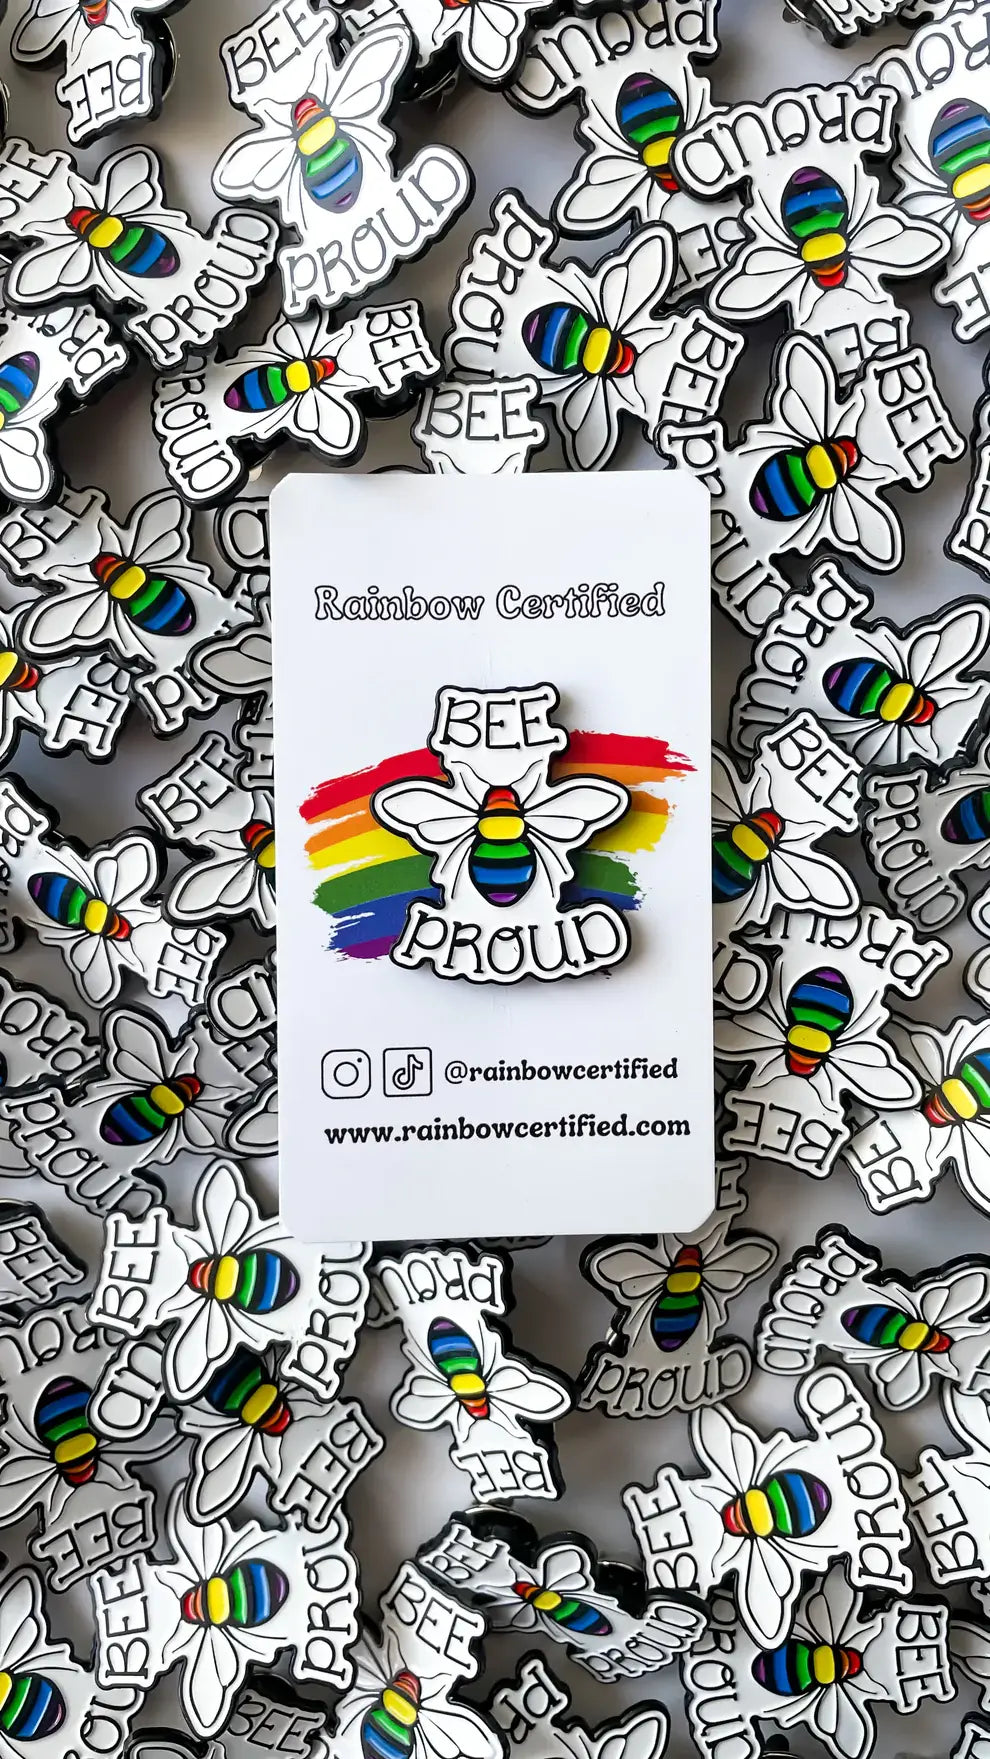 Rainbow Certified - Bee Proud LGBTQ+ PRIDE Pin